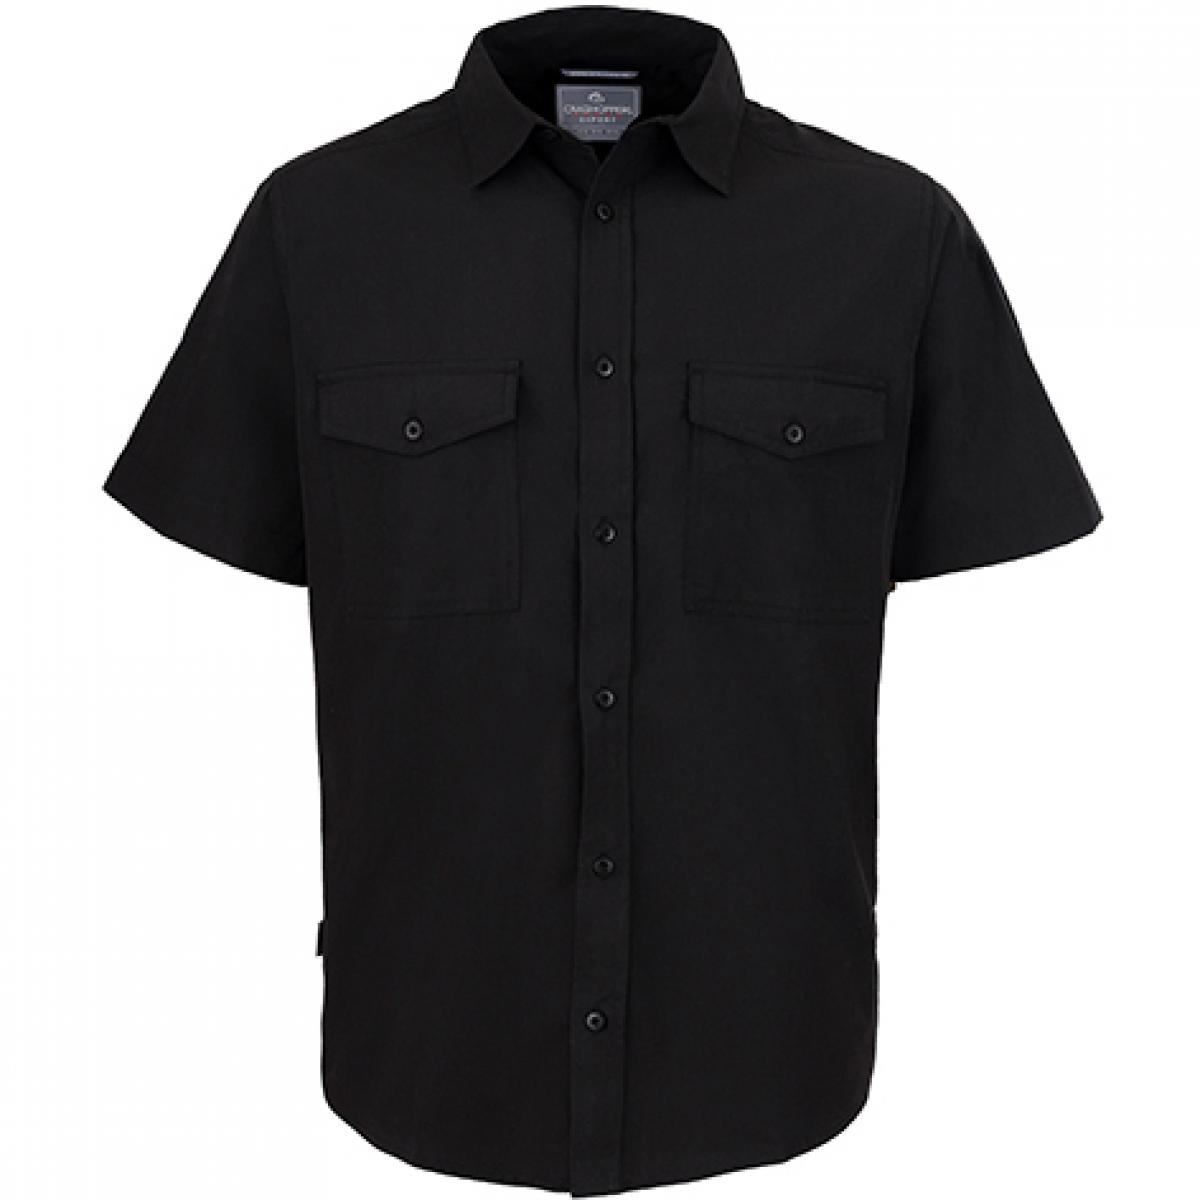 Hersteller: Craghoppers Expert Herstellernummer: CES003 Artikelbezeichnung: Expert Kiwi Short Sleeved Shirt Farbe: Black